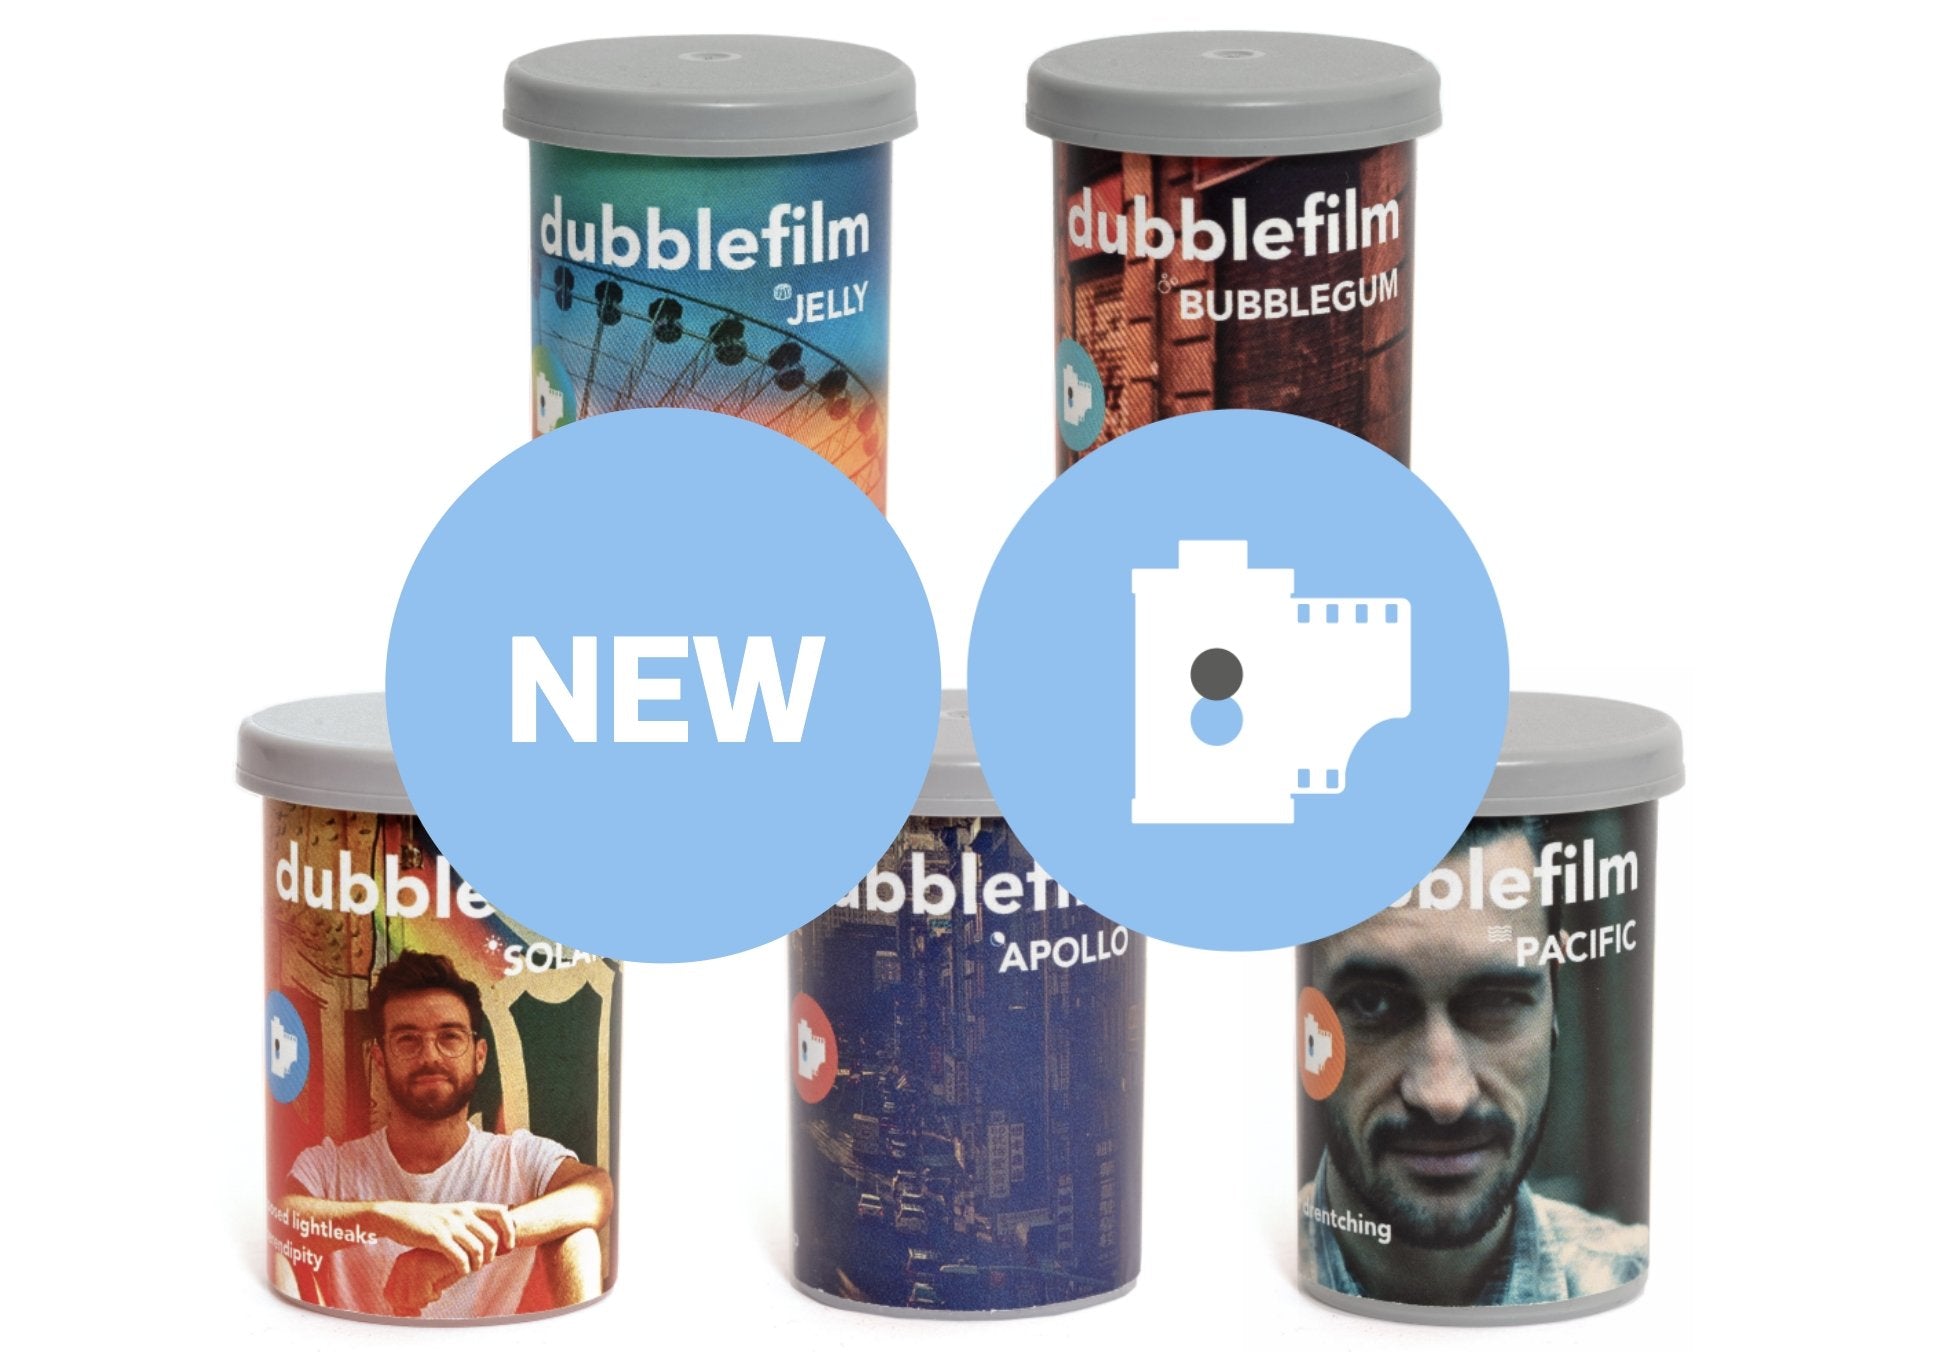 New Dubblefilm Range! More Film Photos for More Creativity - Analogue Wonderland